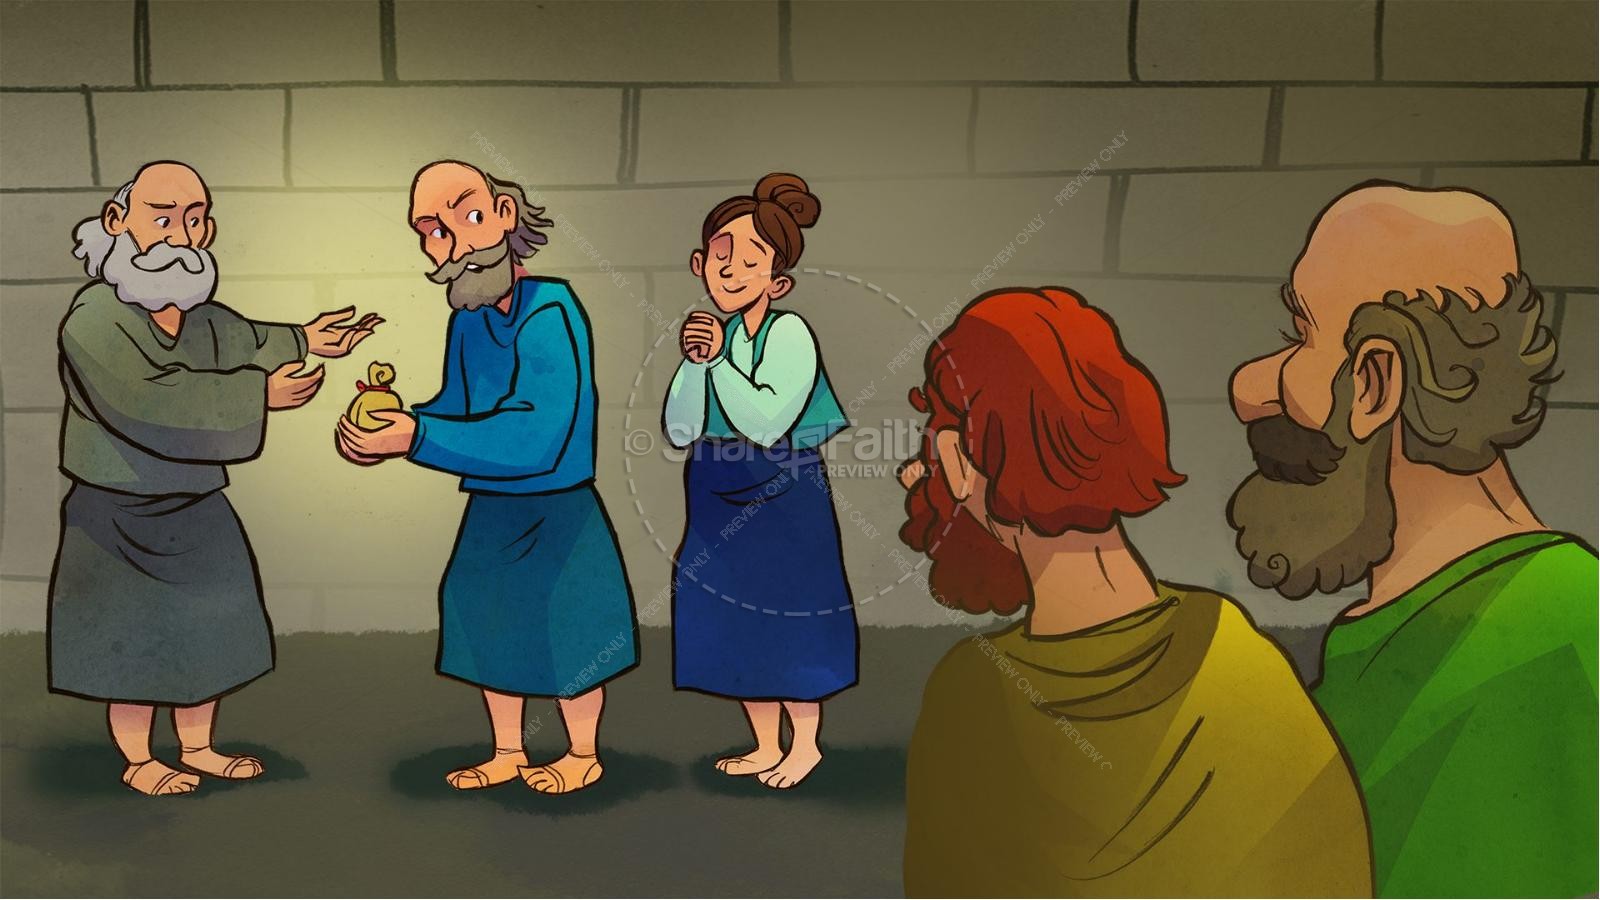 Acts 5 Ananias and Sapphira Kids Bible Stories | slide 3